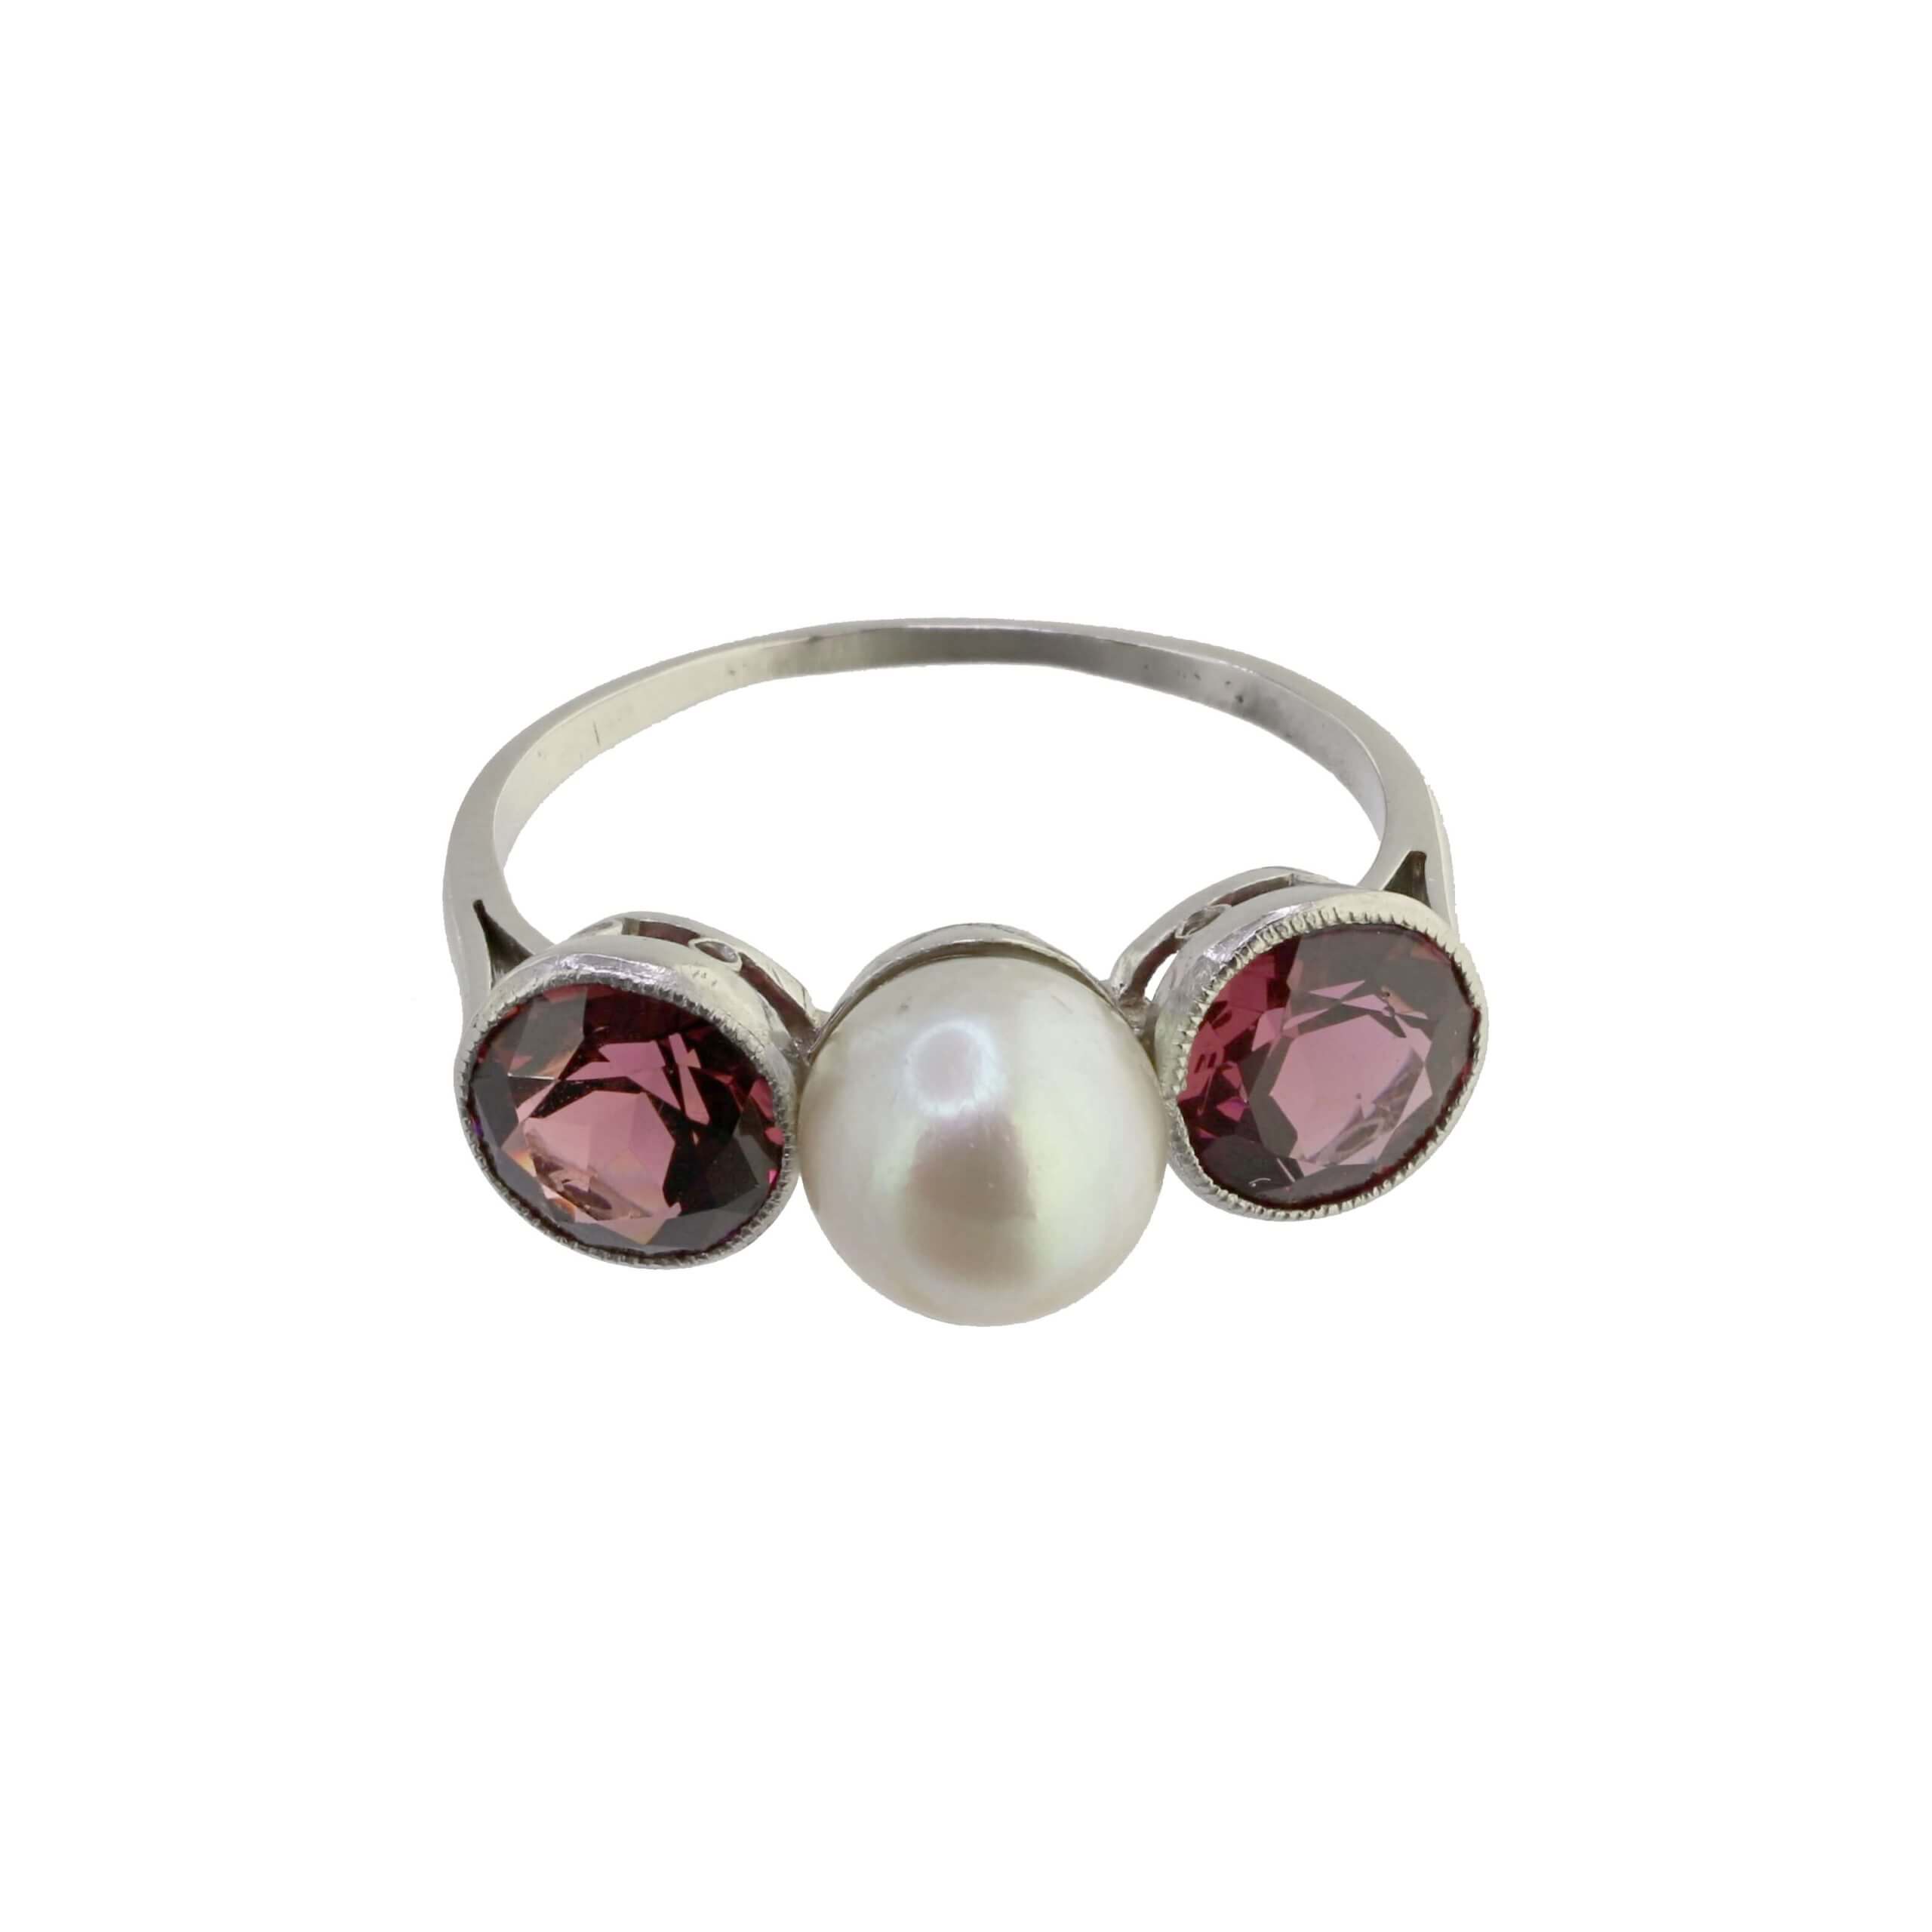 Garnet Pearl Ring